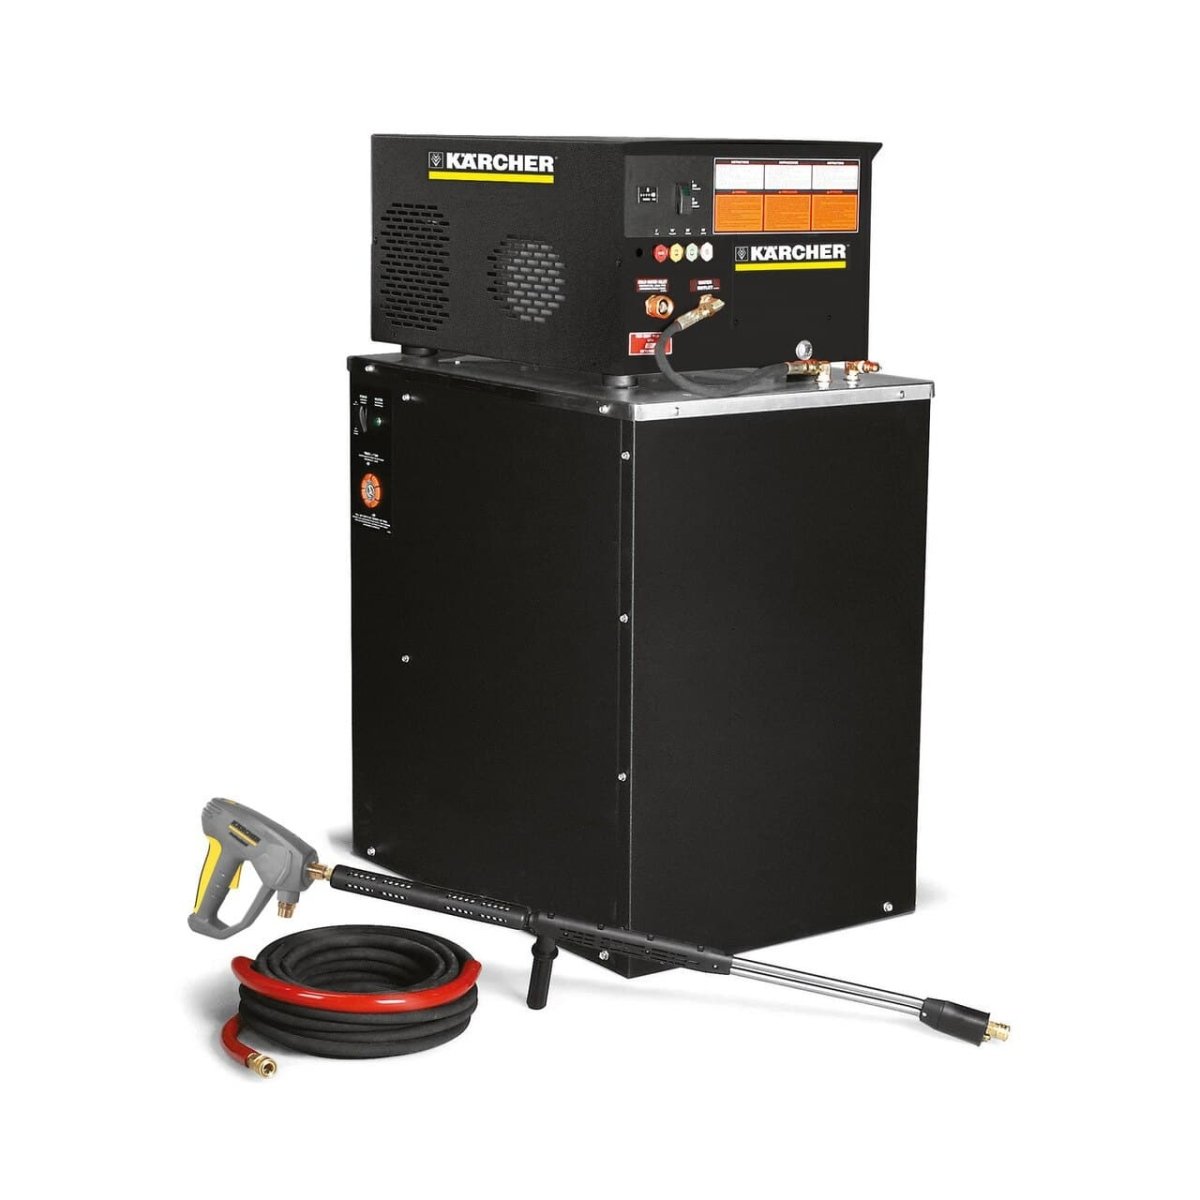 HDS Cabinet Hot Water Pressure Washer - Karcher